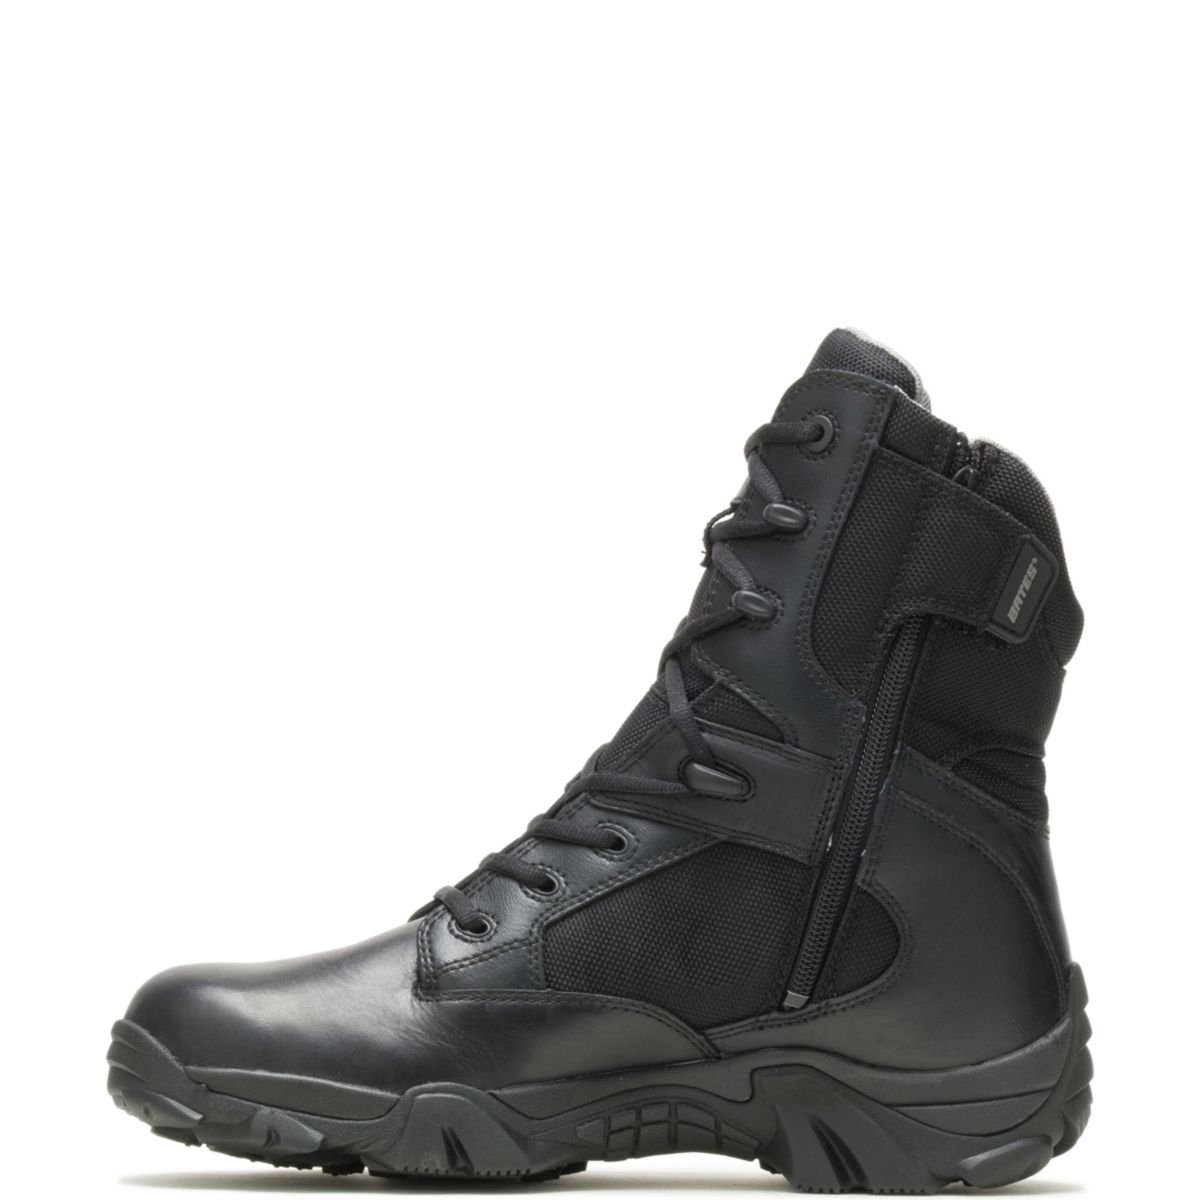 Bates Men's GX-8 Side-Zip GORE-TEXÂ® Waterproof Boot Black - E02268 BLACK - BLACK, 10-M